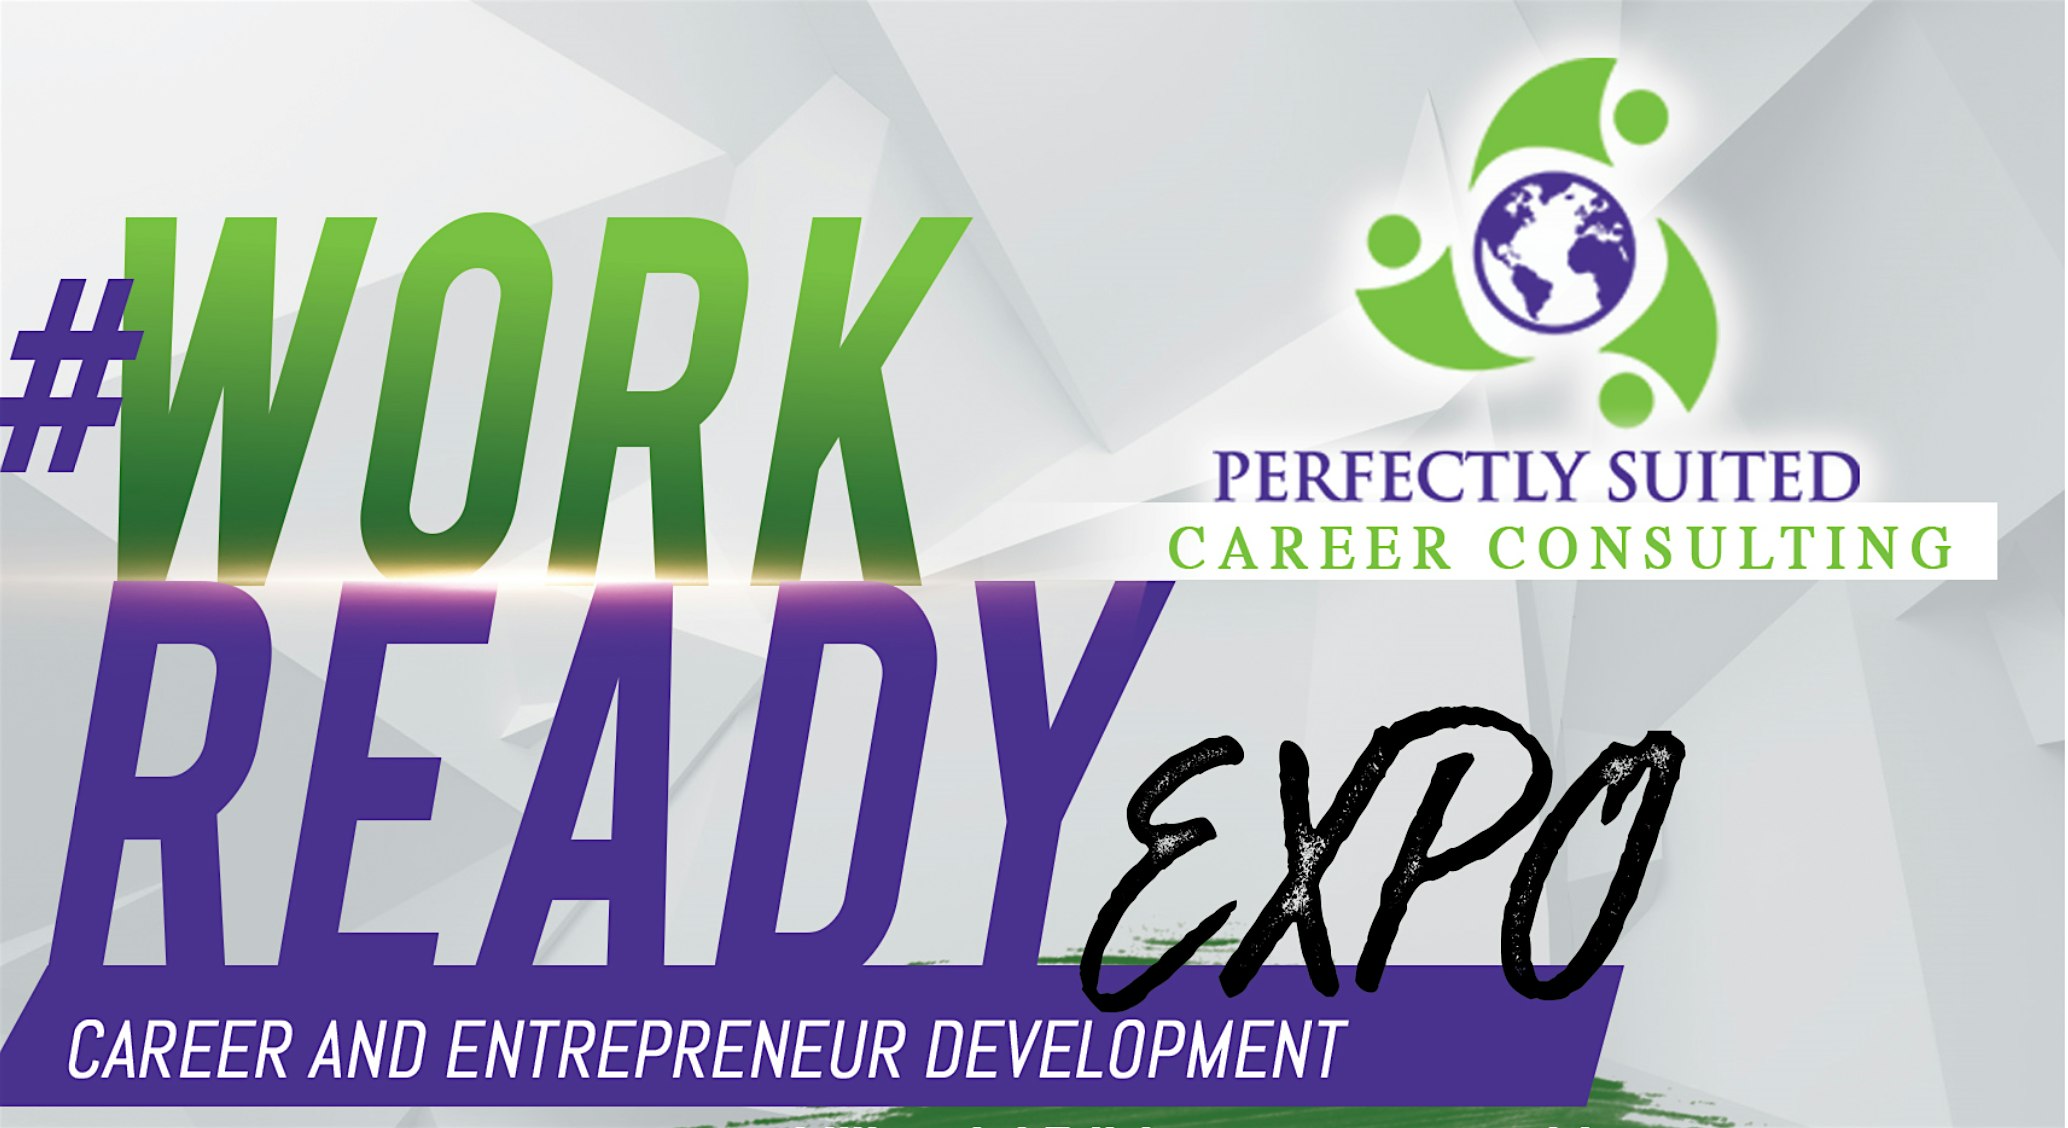 #WORKREADY Career and Entrepreneur Development EXPO